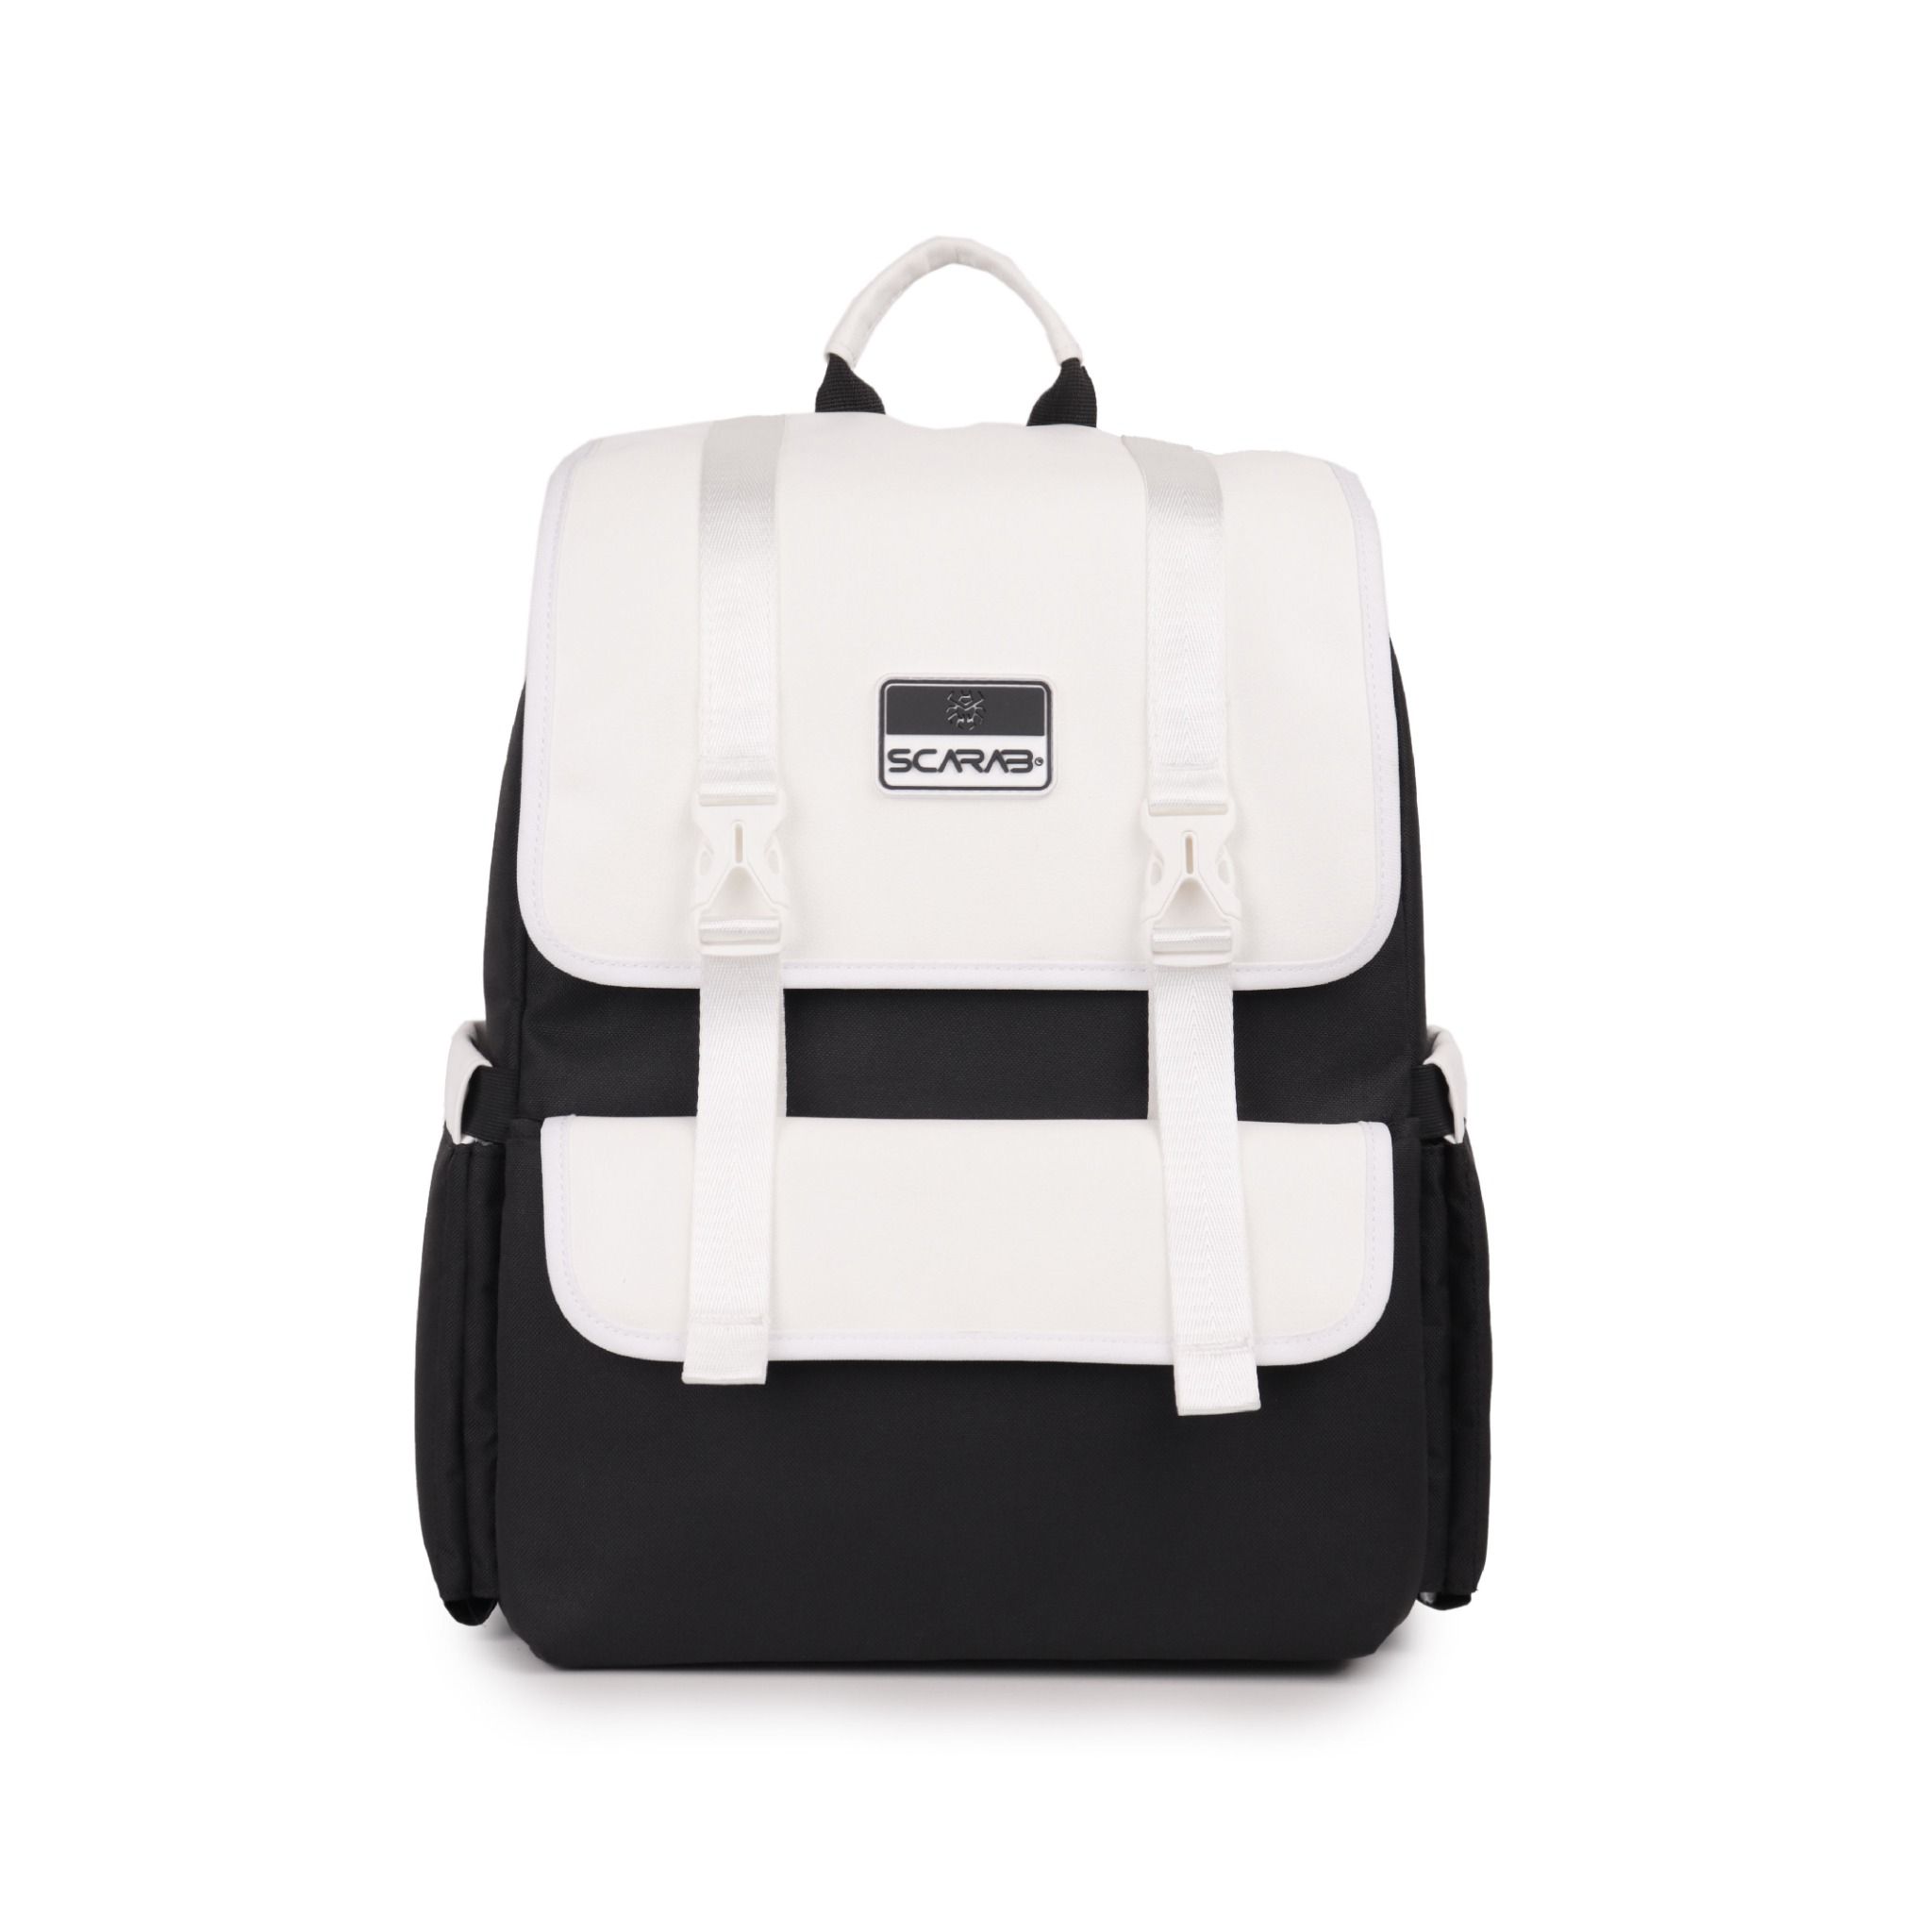  Passion Backpack - Black White 